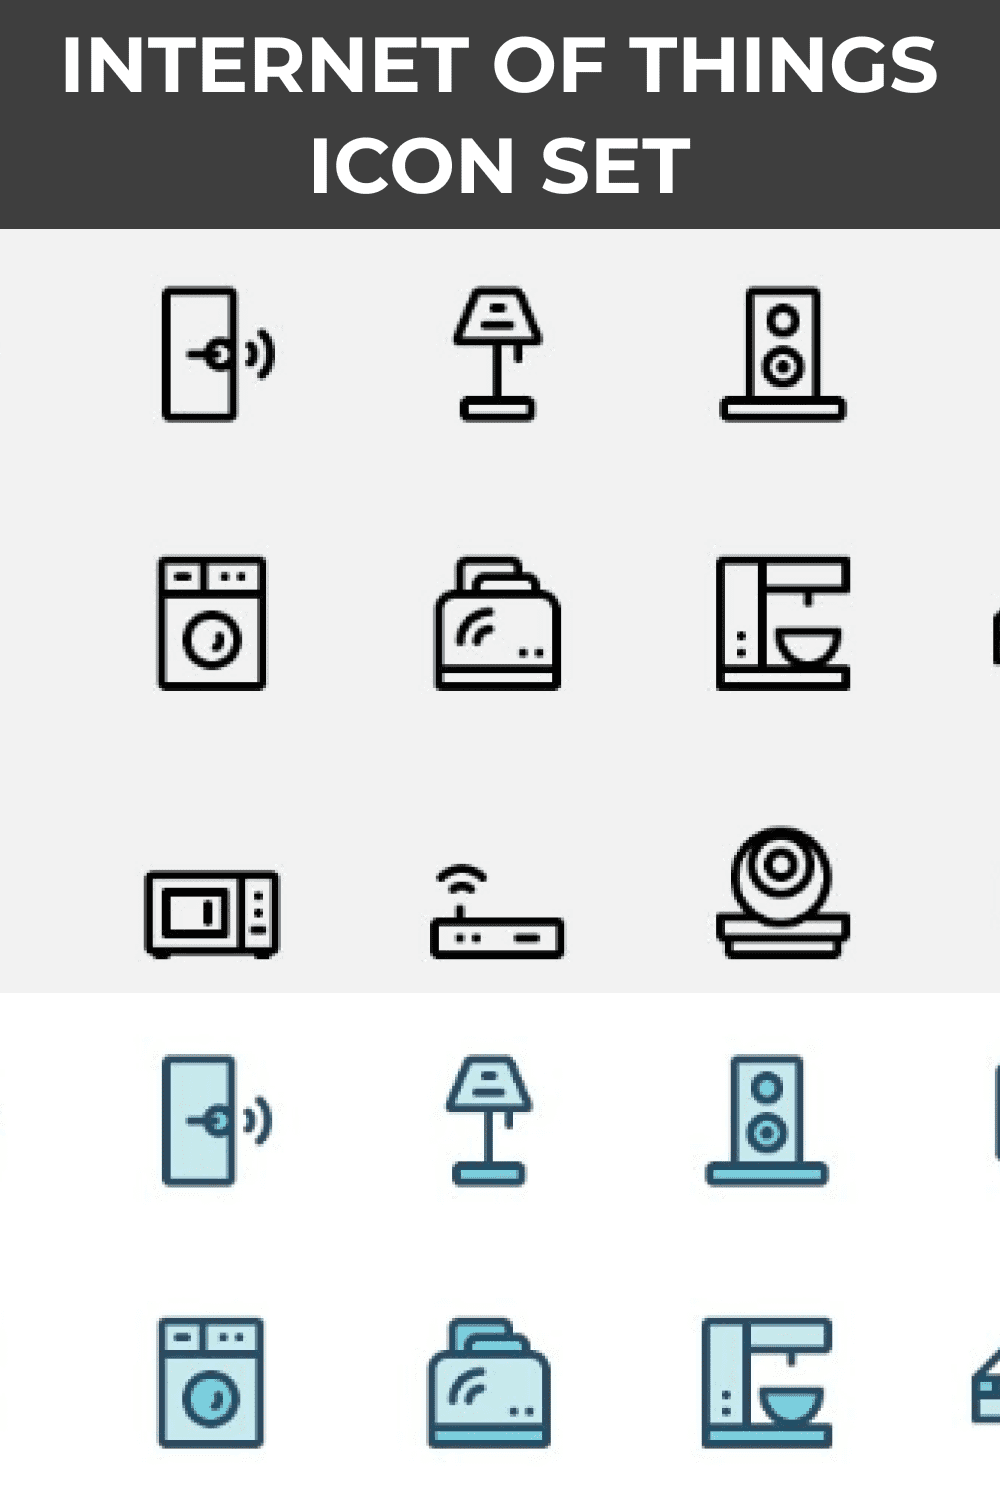 Internet of Things Icon Set Pinterest.